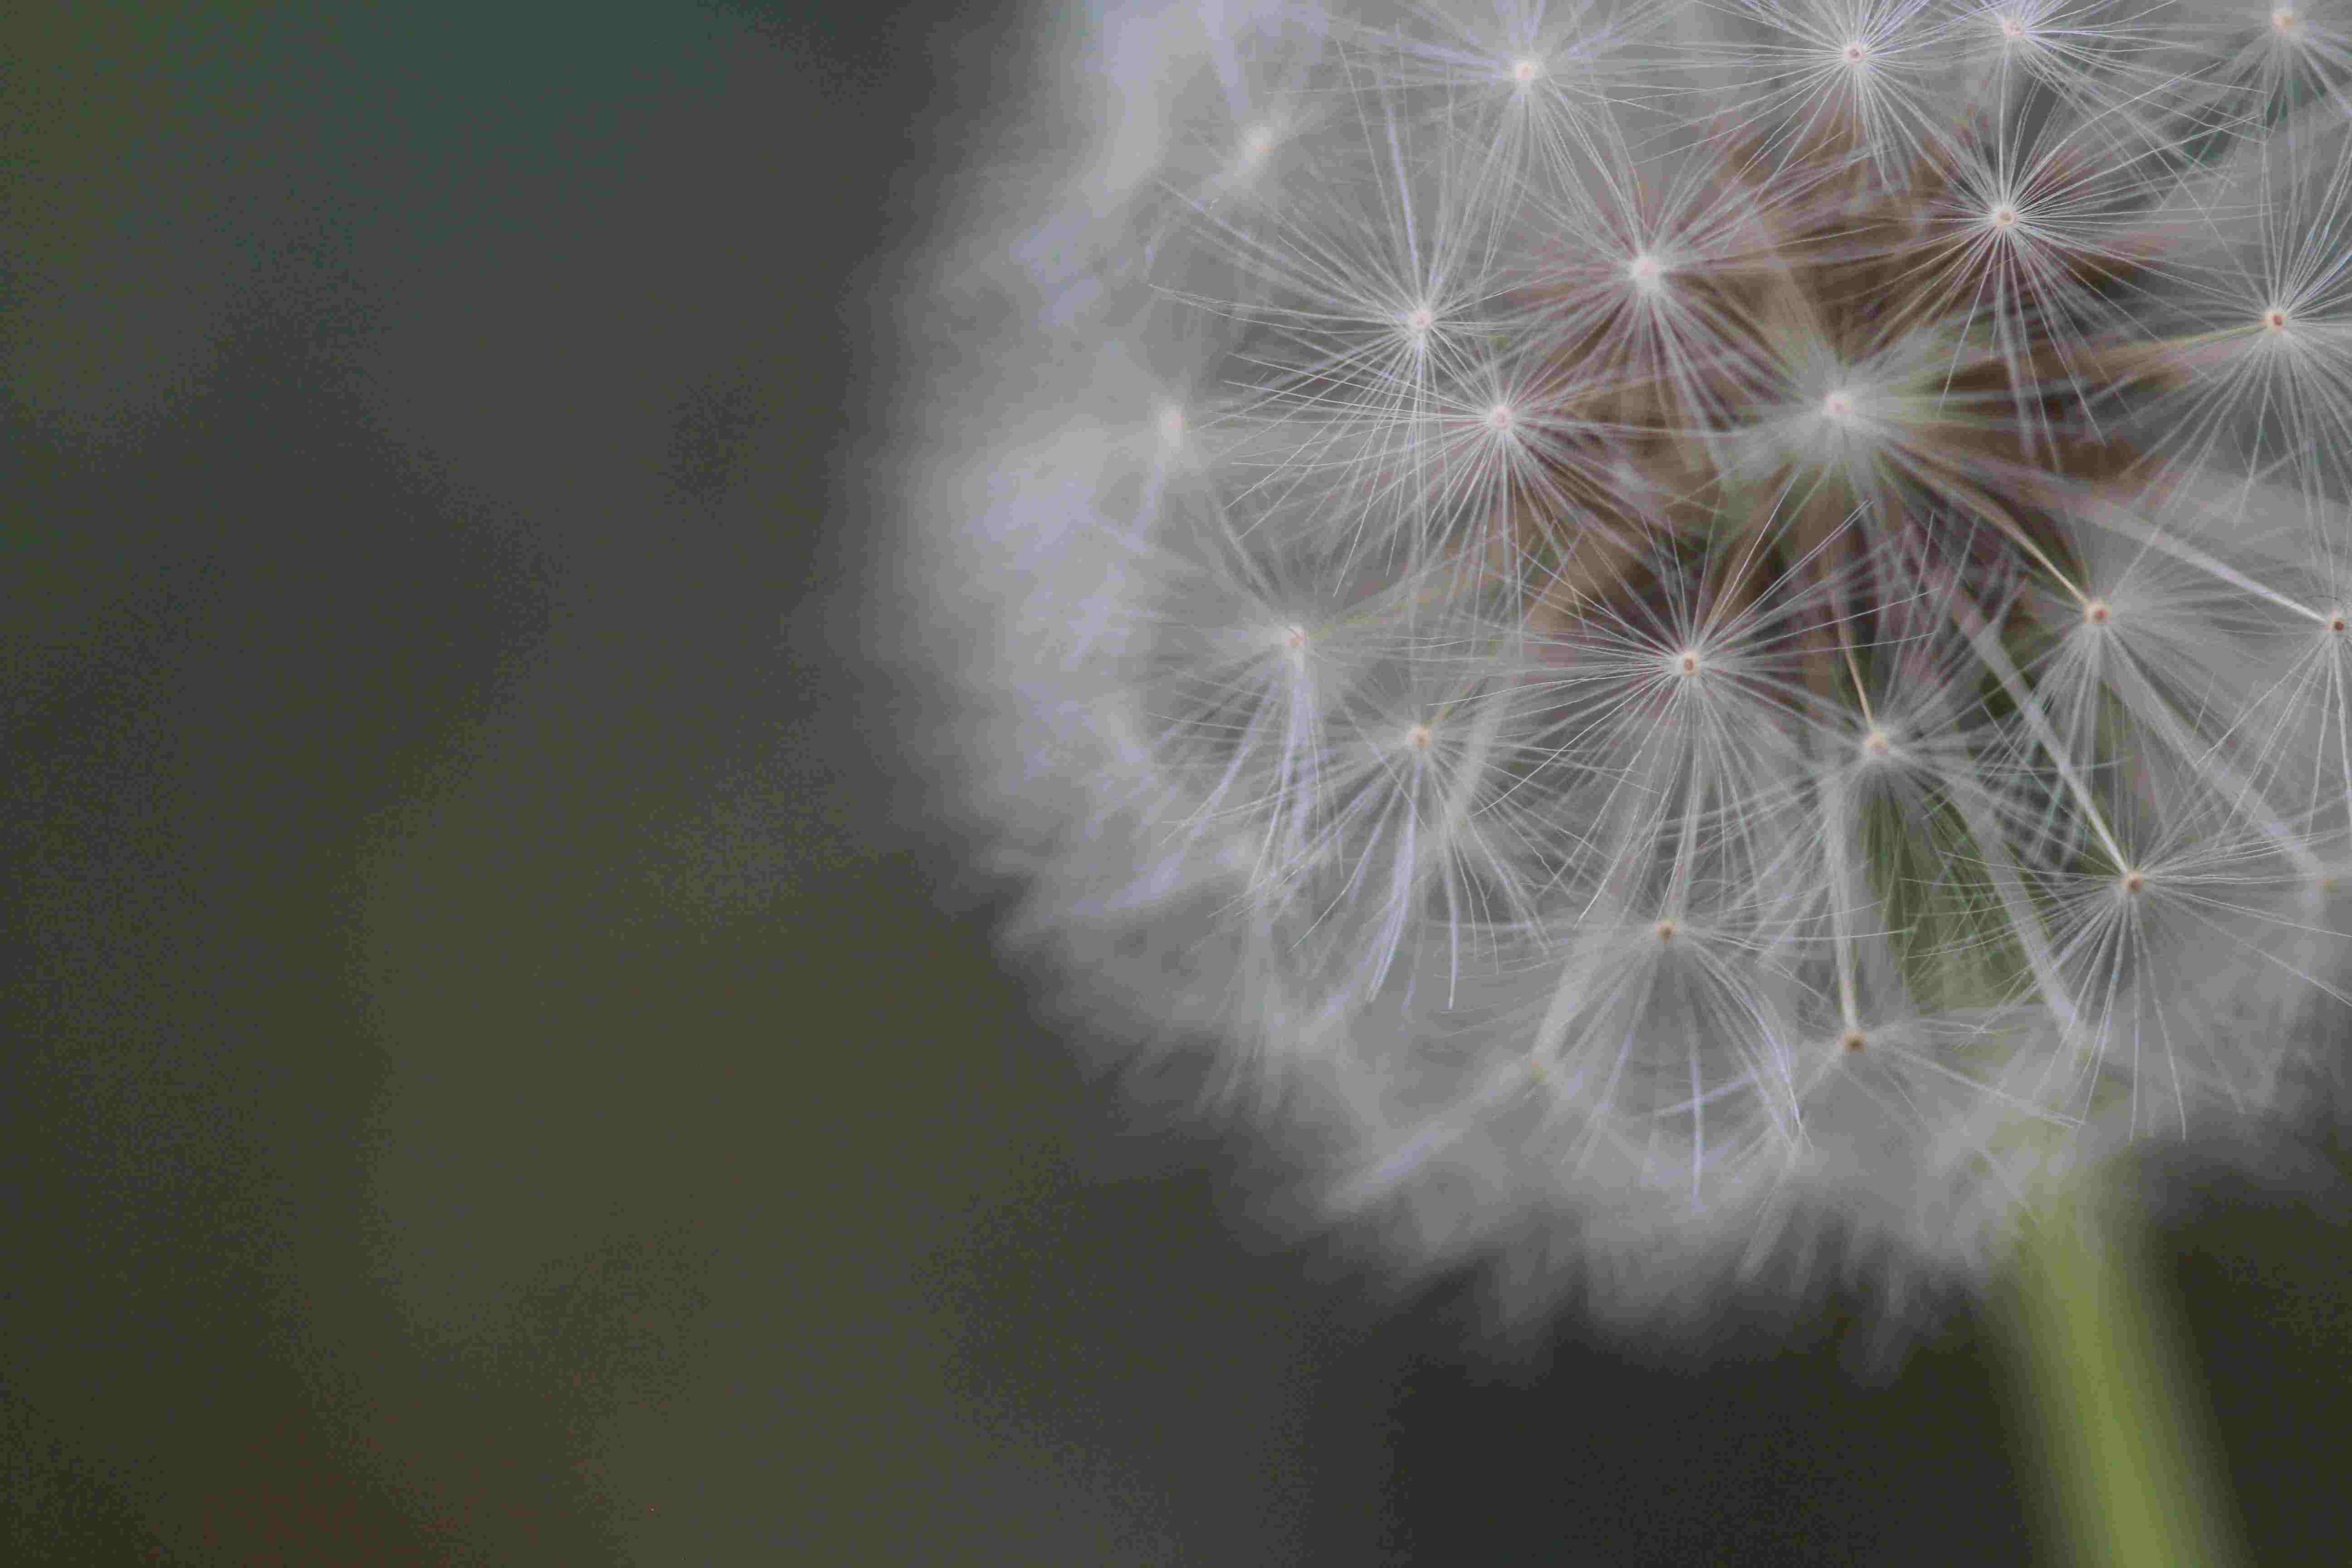 Macro shot of a dandelion